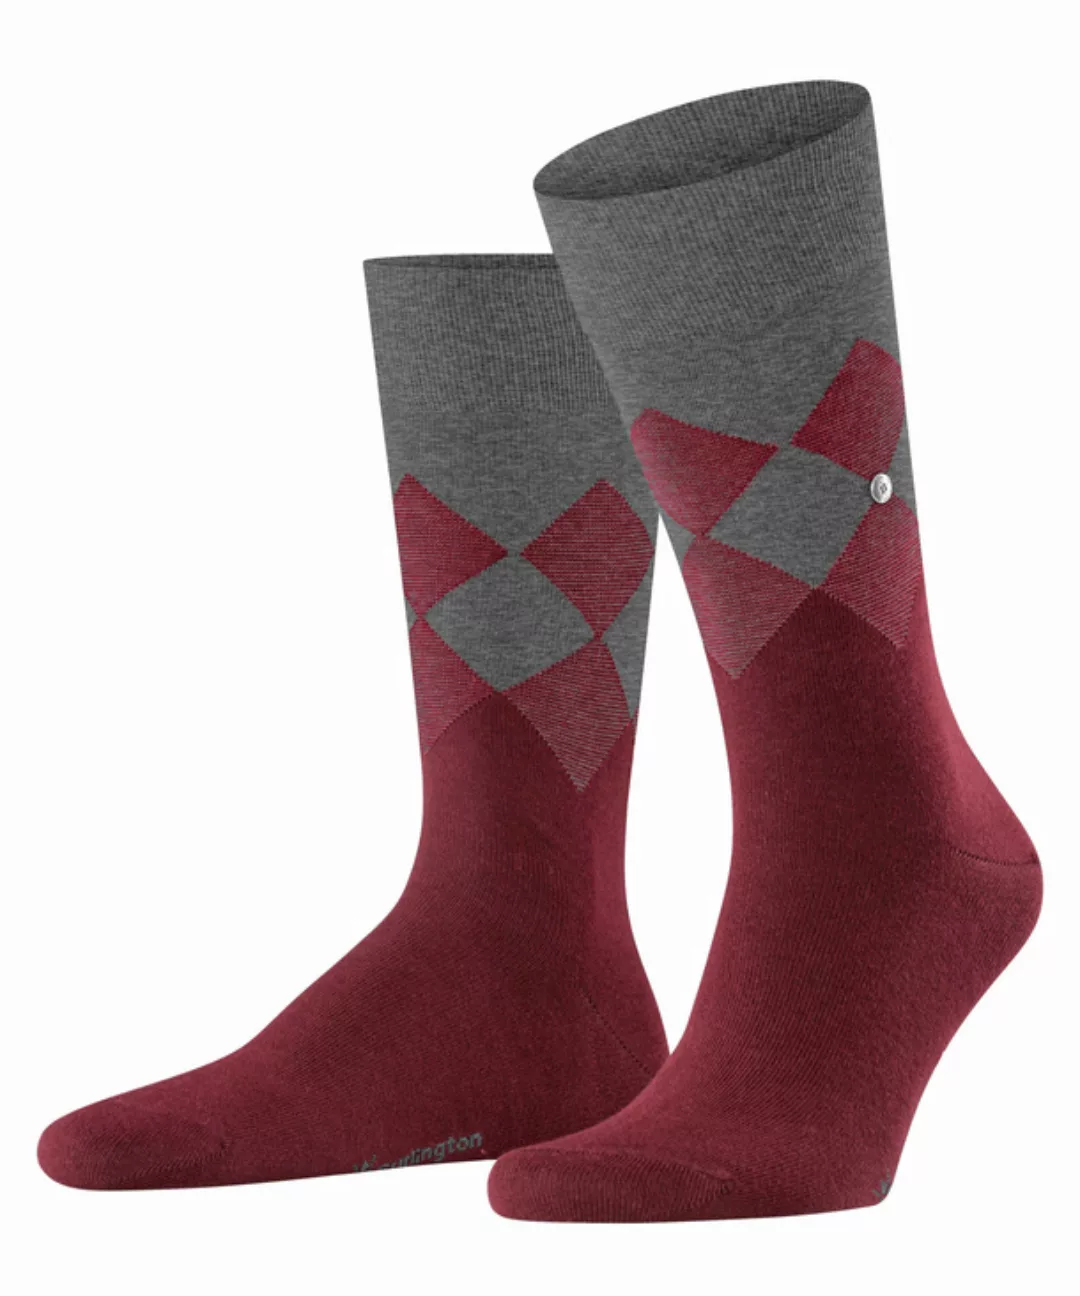 Burlington Hampstead Herren Socken, 40-46, Rot, Baumwolle, 21912-883002 günstig online kaufen